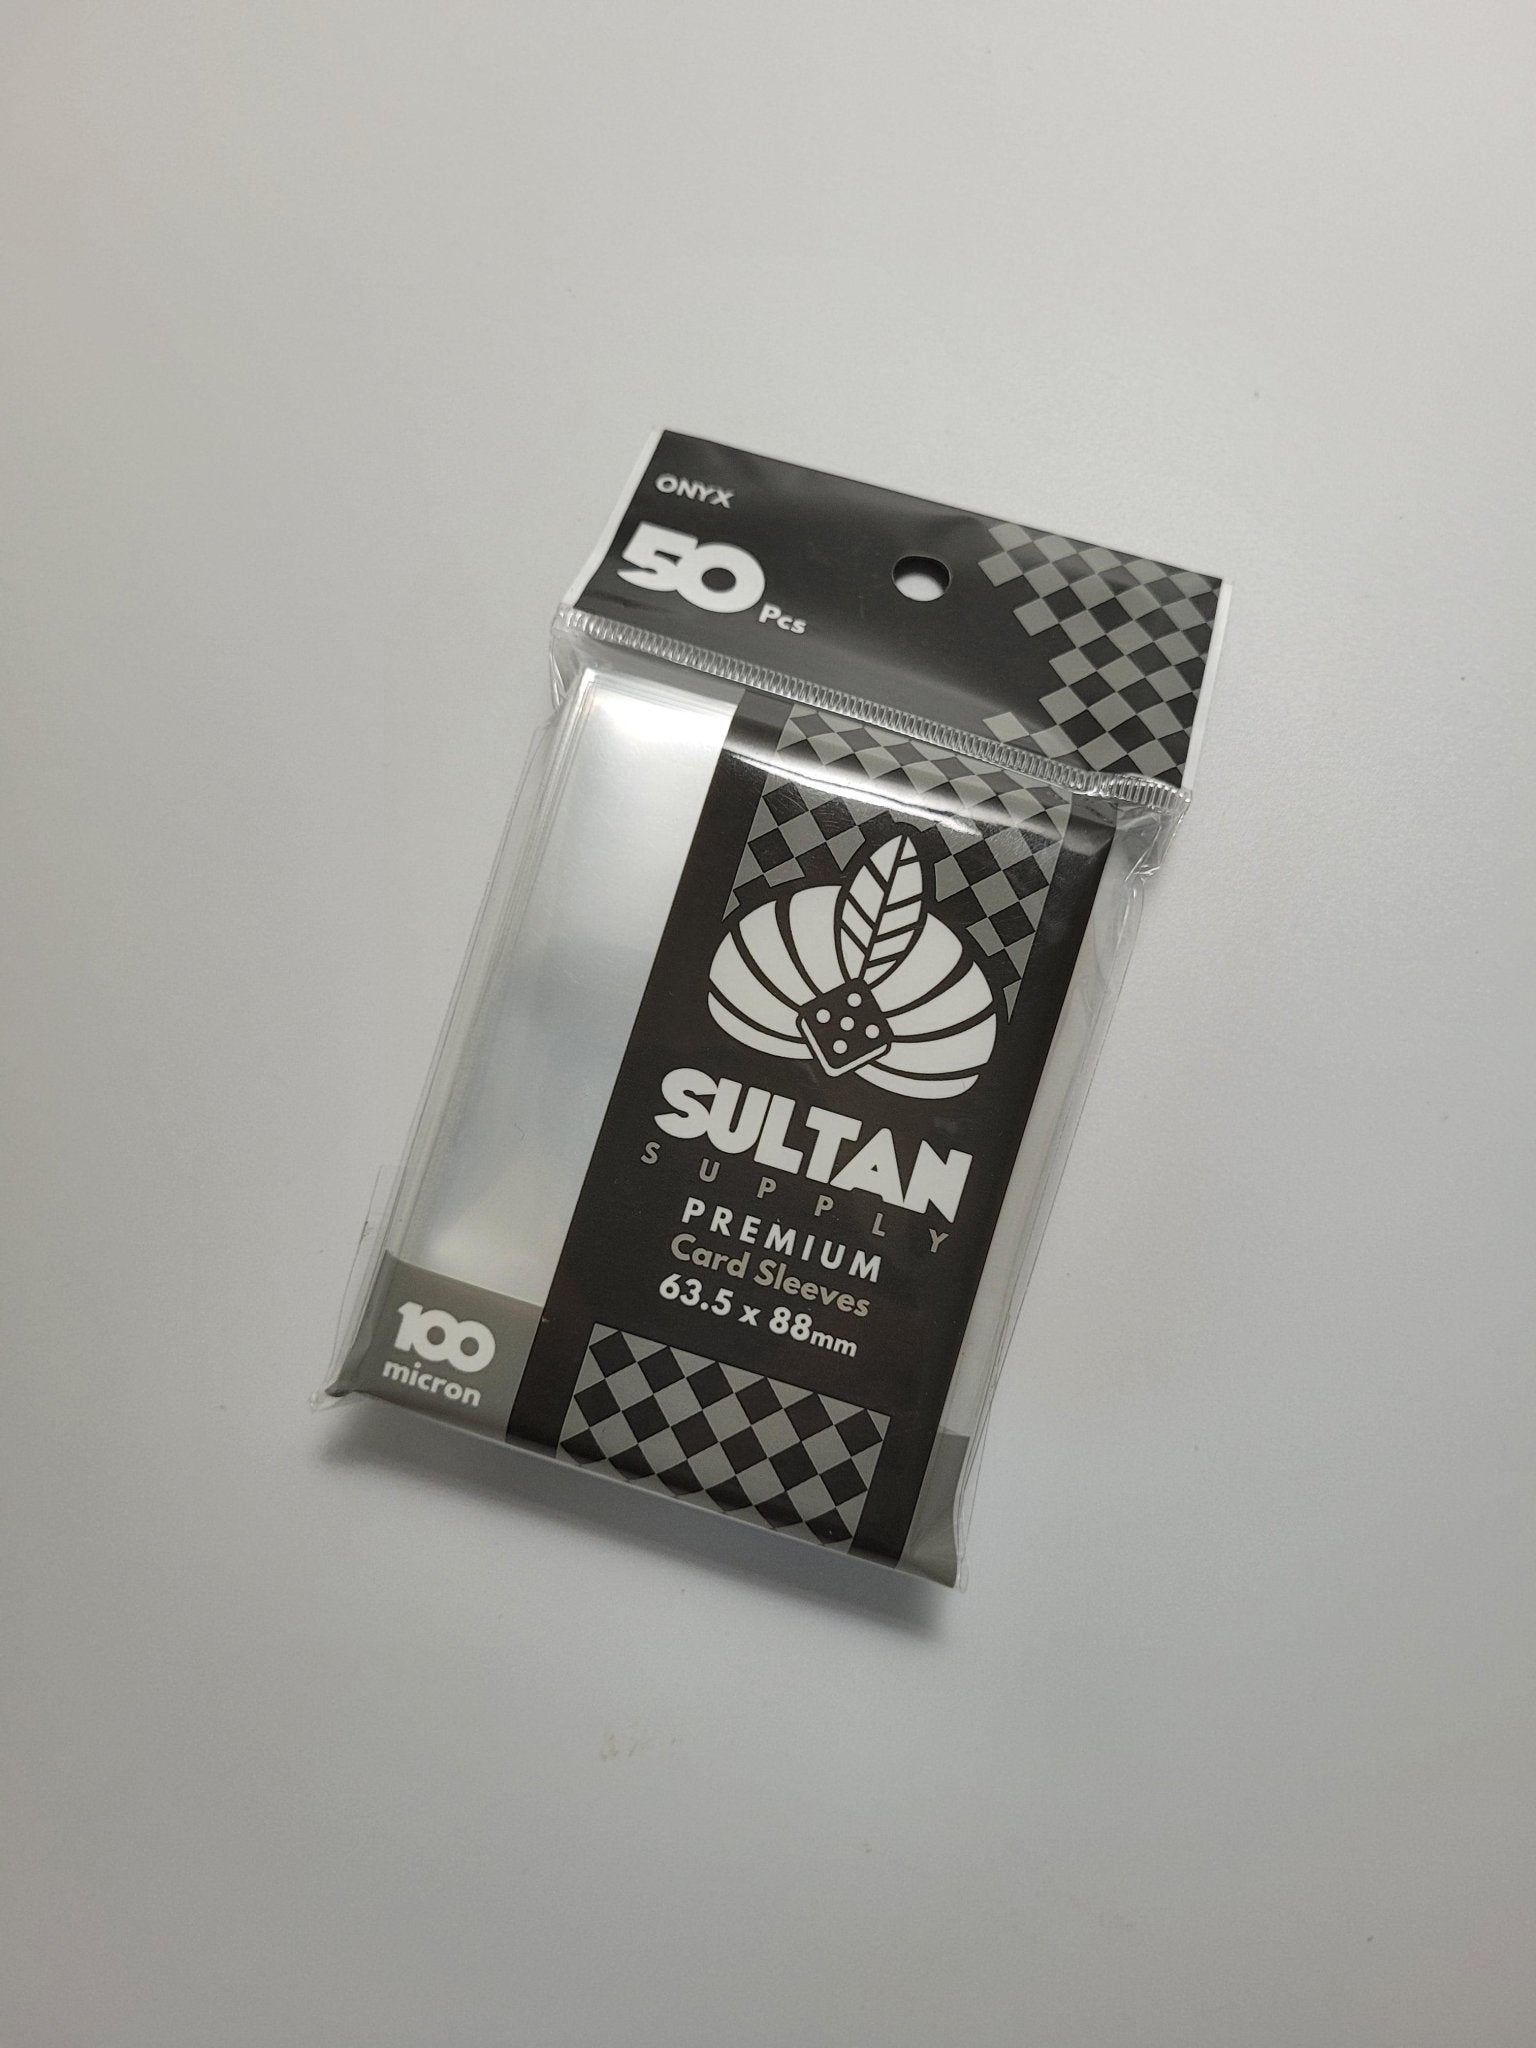 Sultan Supply Premium Card Sleeves: 63.5 x 88 mm Standard Onyx (100 mi